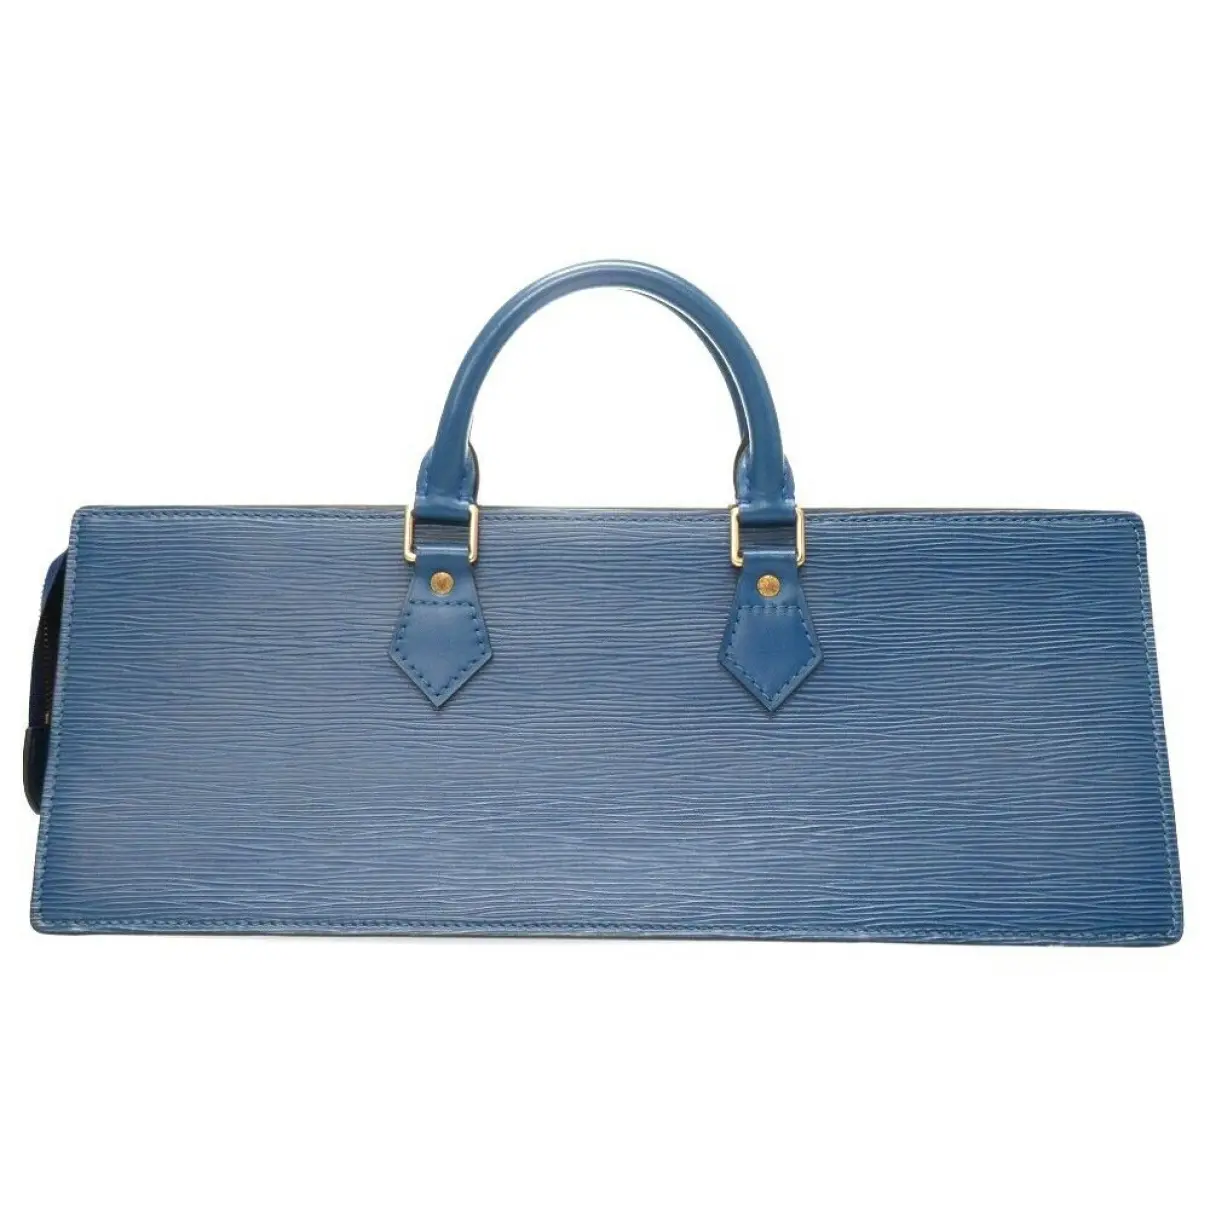 Buy Louis Vuitton Triangle leather handbag online